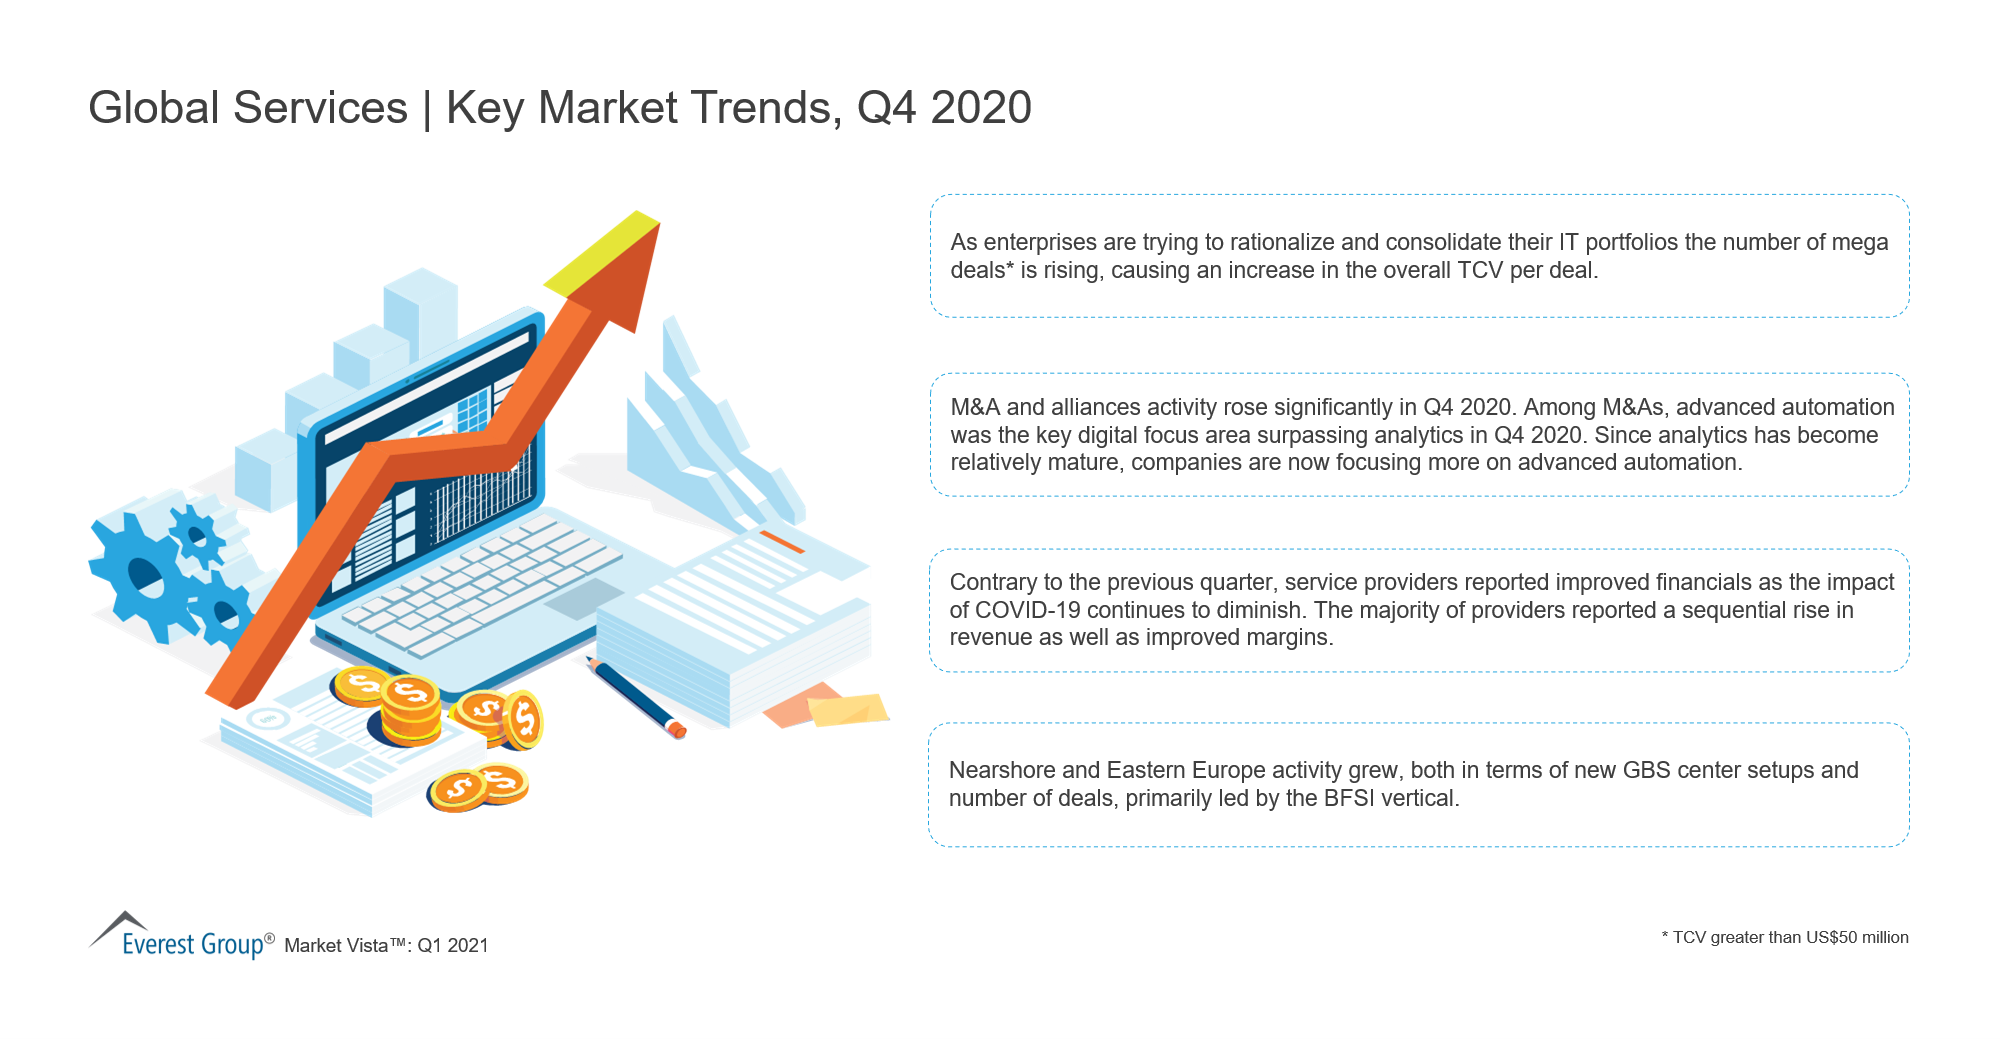 Global Services: Key Market Trends, Q4 2020